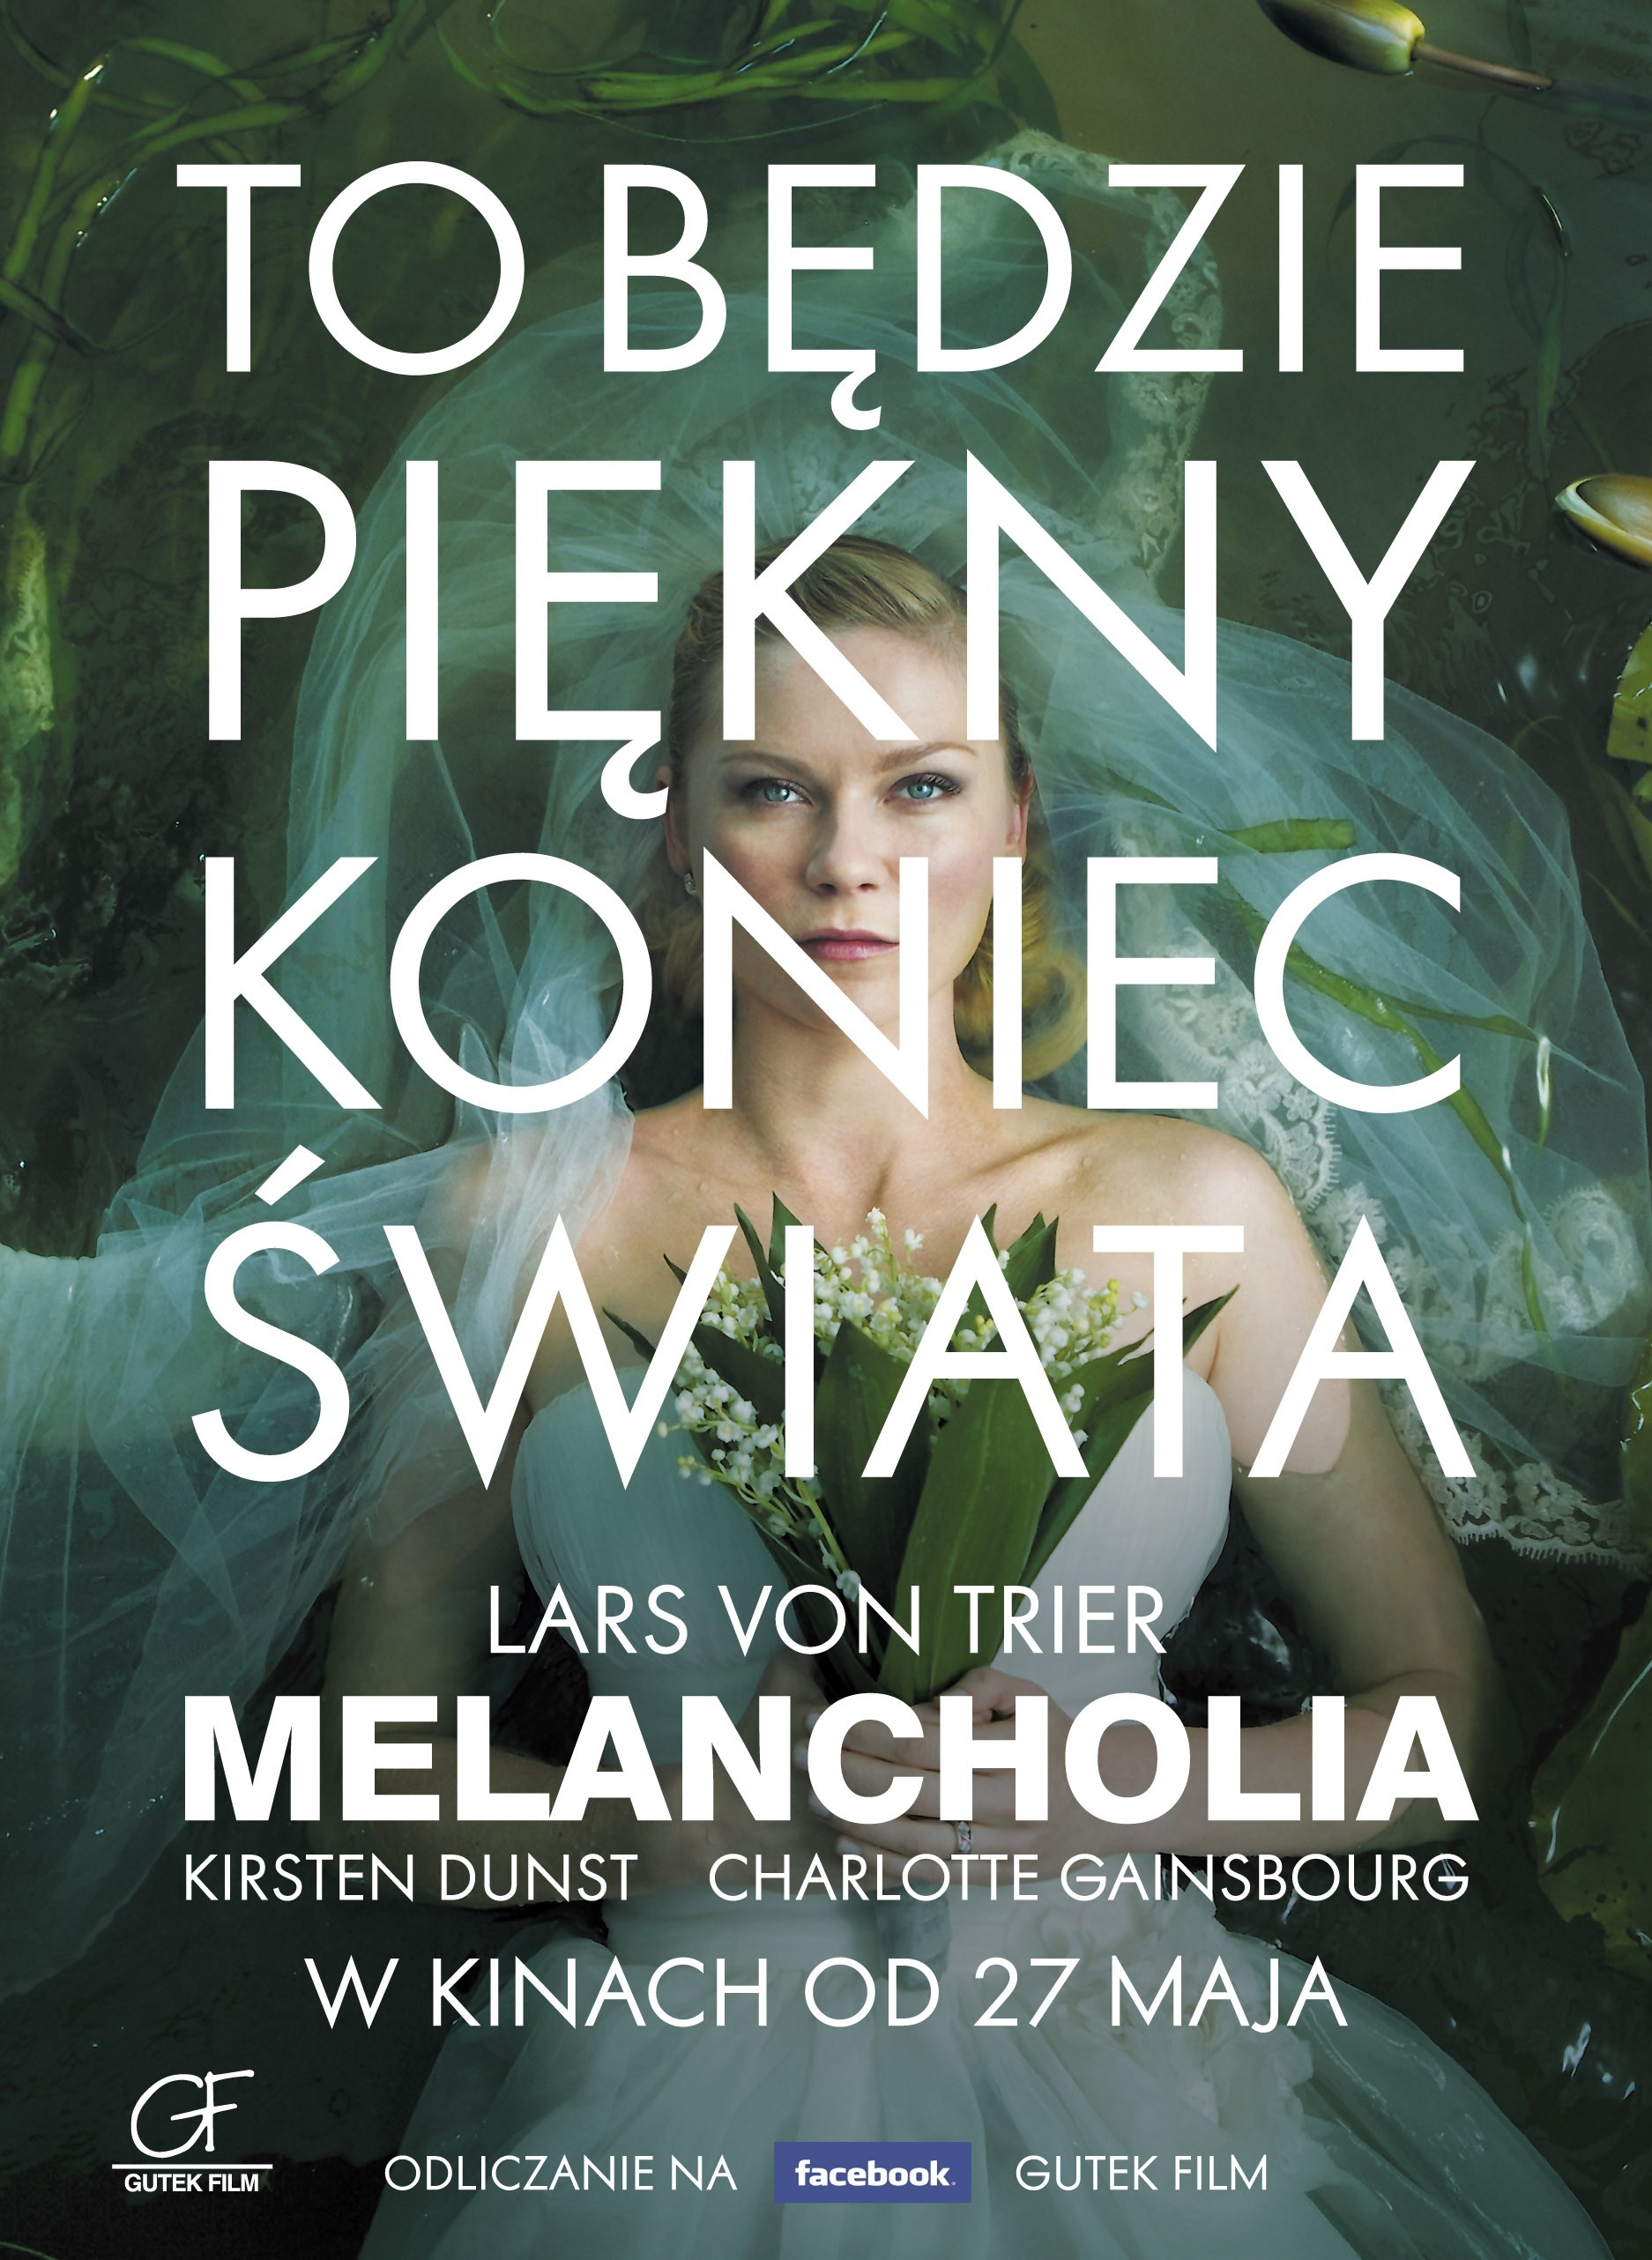 Mega Sized Movie Poster Image for Melancholia (#2 of 11)